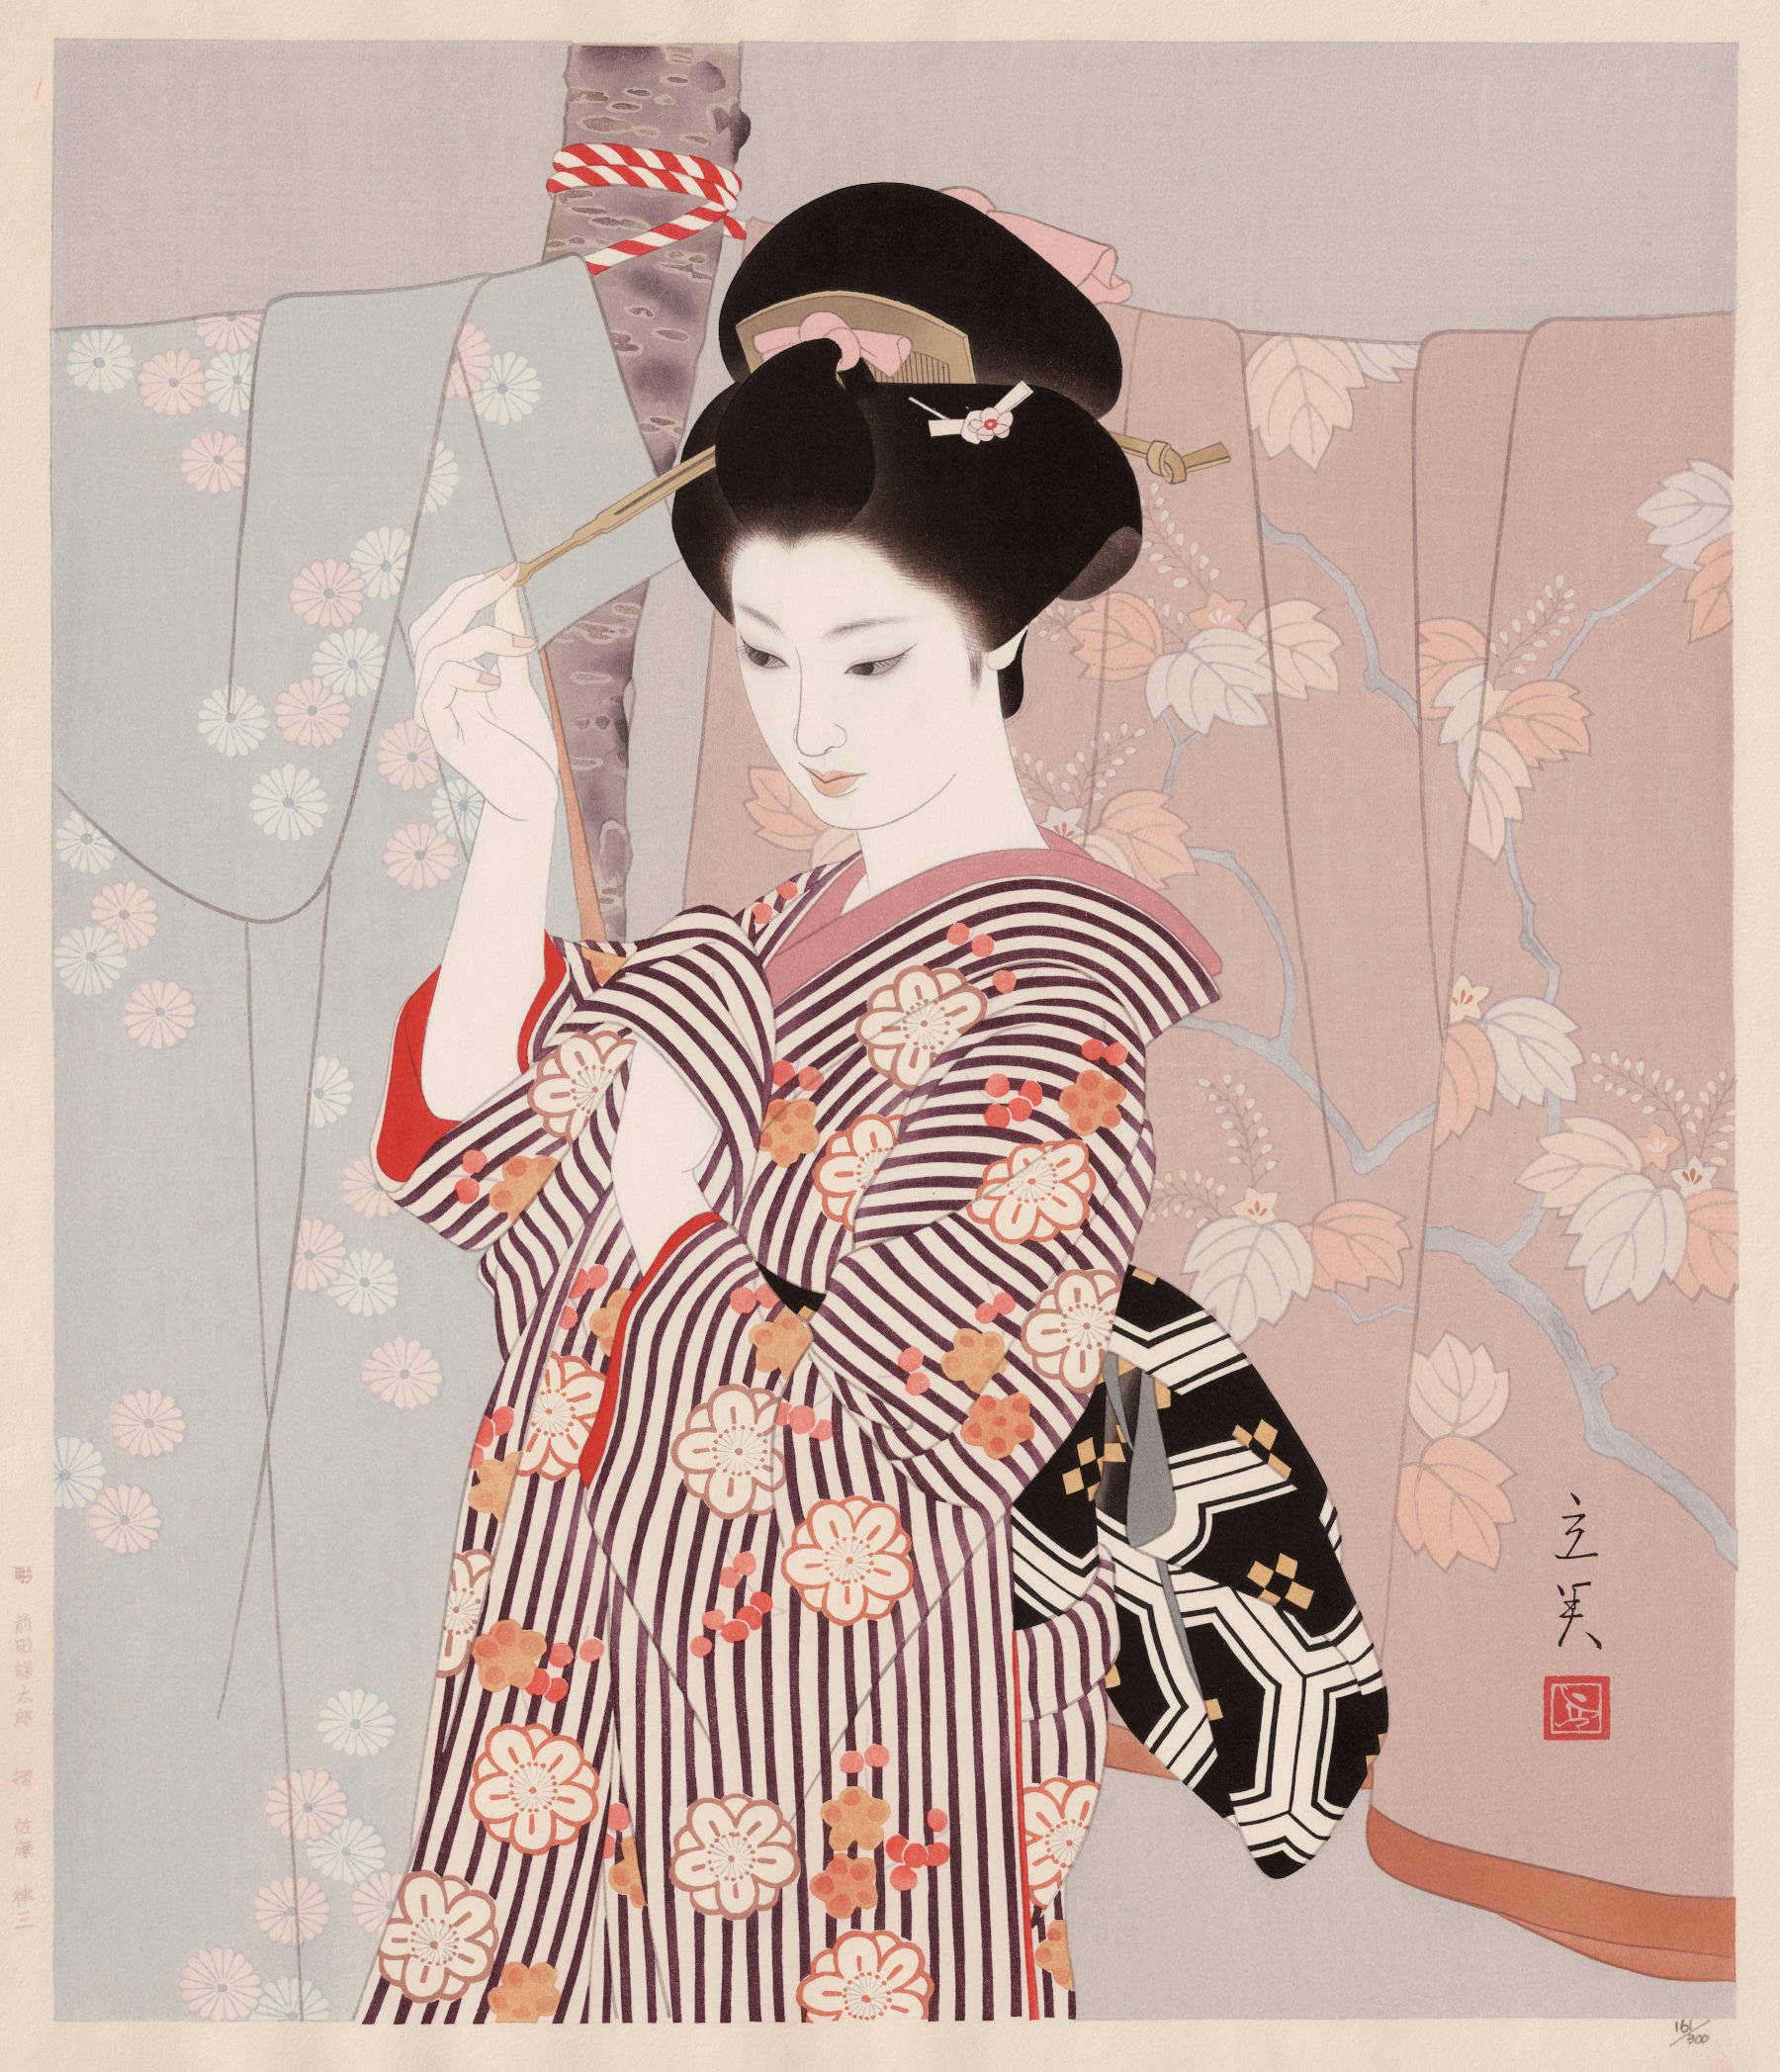 Shimura Tatsumi “Kosodemaku (Kimono curtains)” 1983 woodblock print